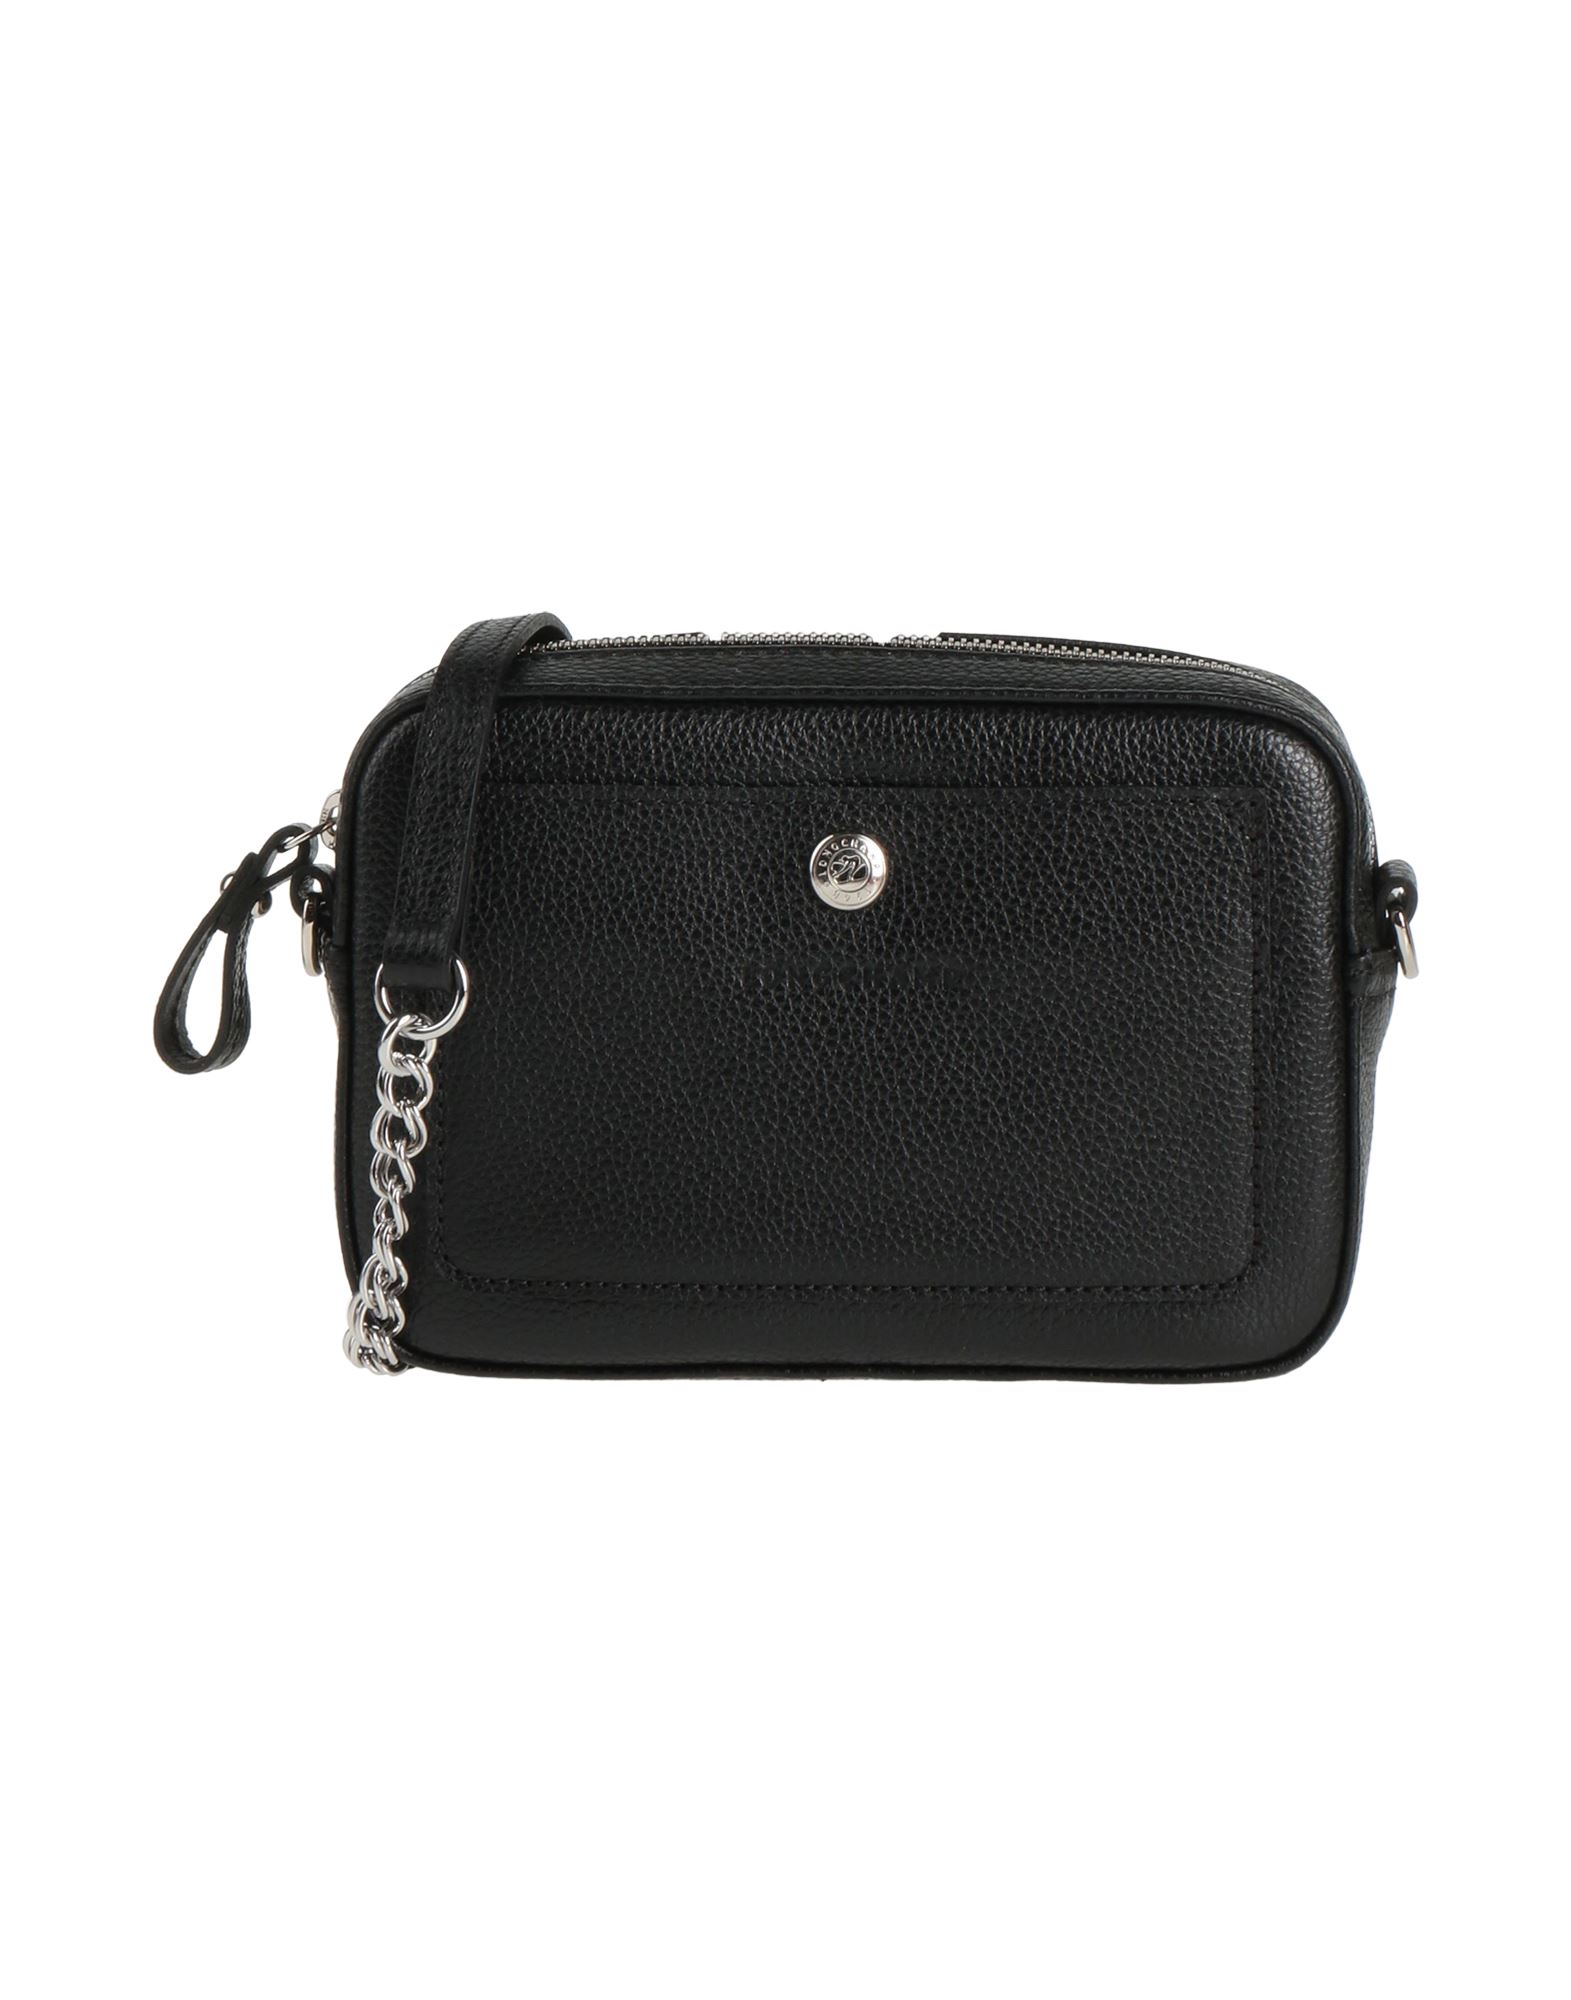 Longchamp Handbags In Black